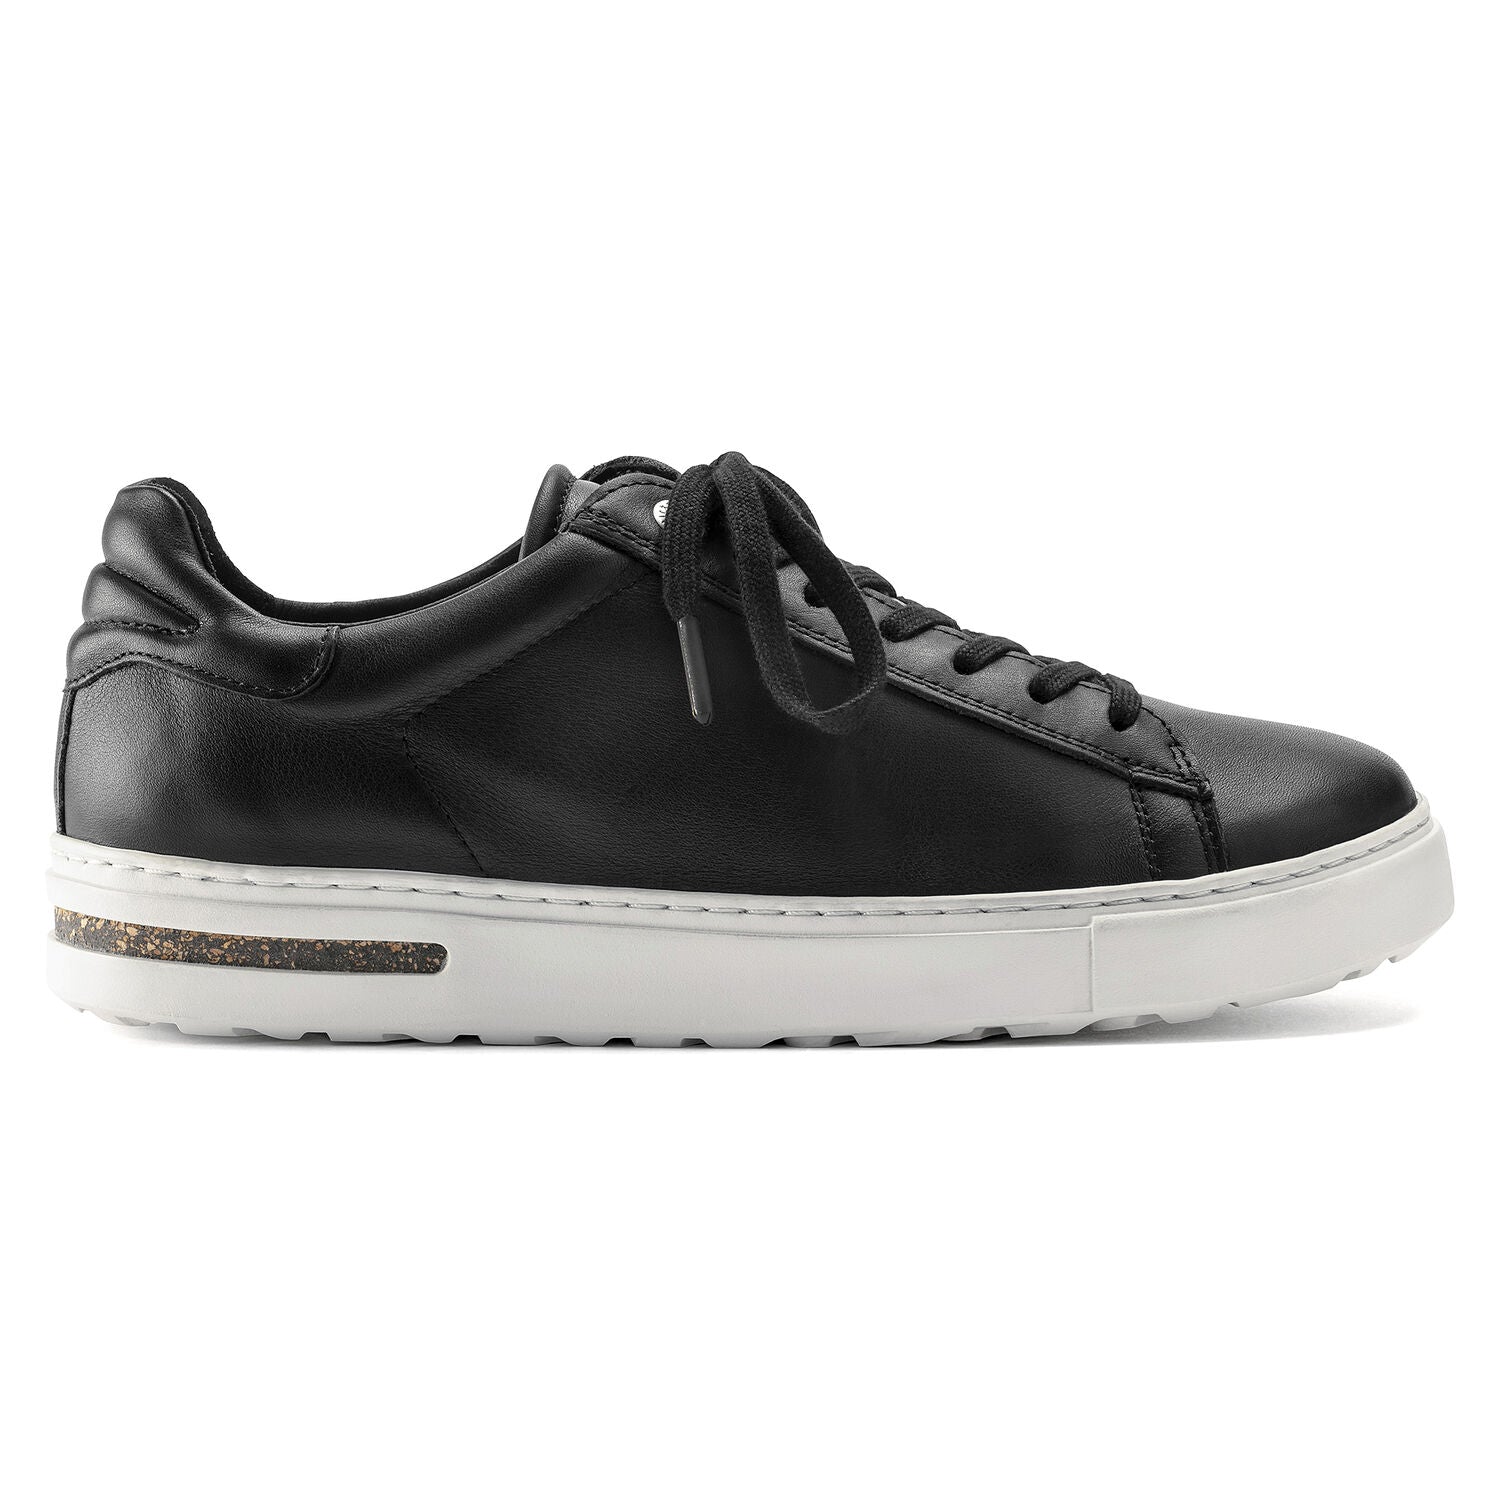 Bend | Leather | Black - Shoe - Birkenstock